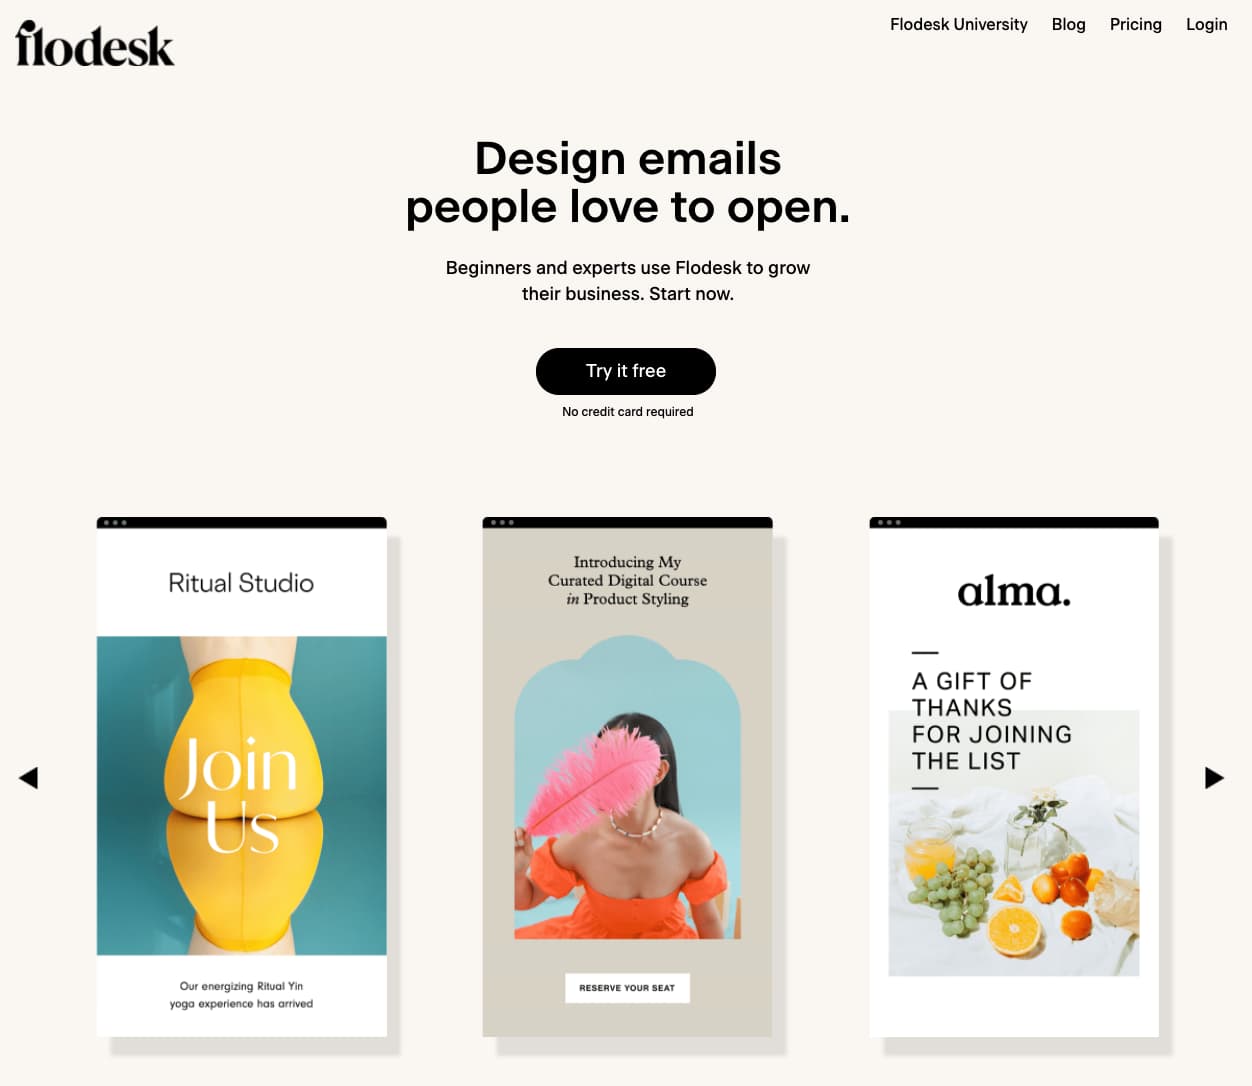 Flodesk email marketing platform